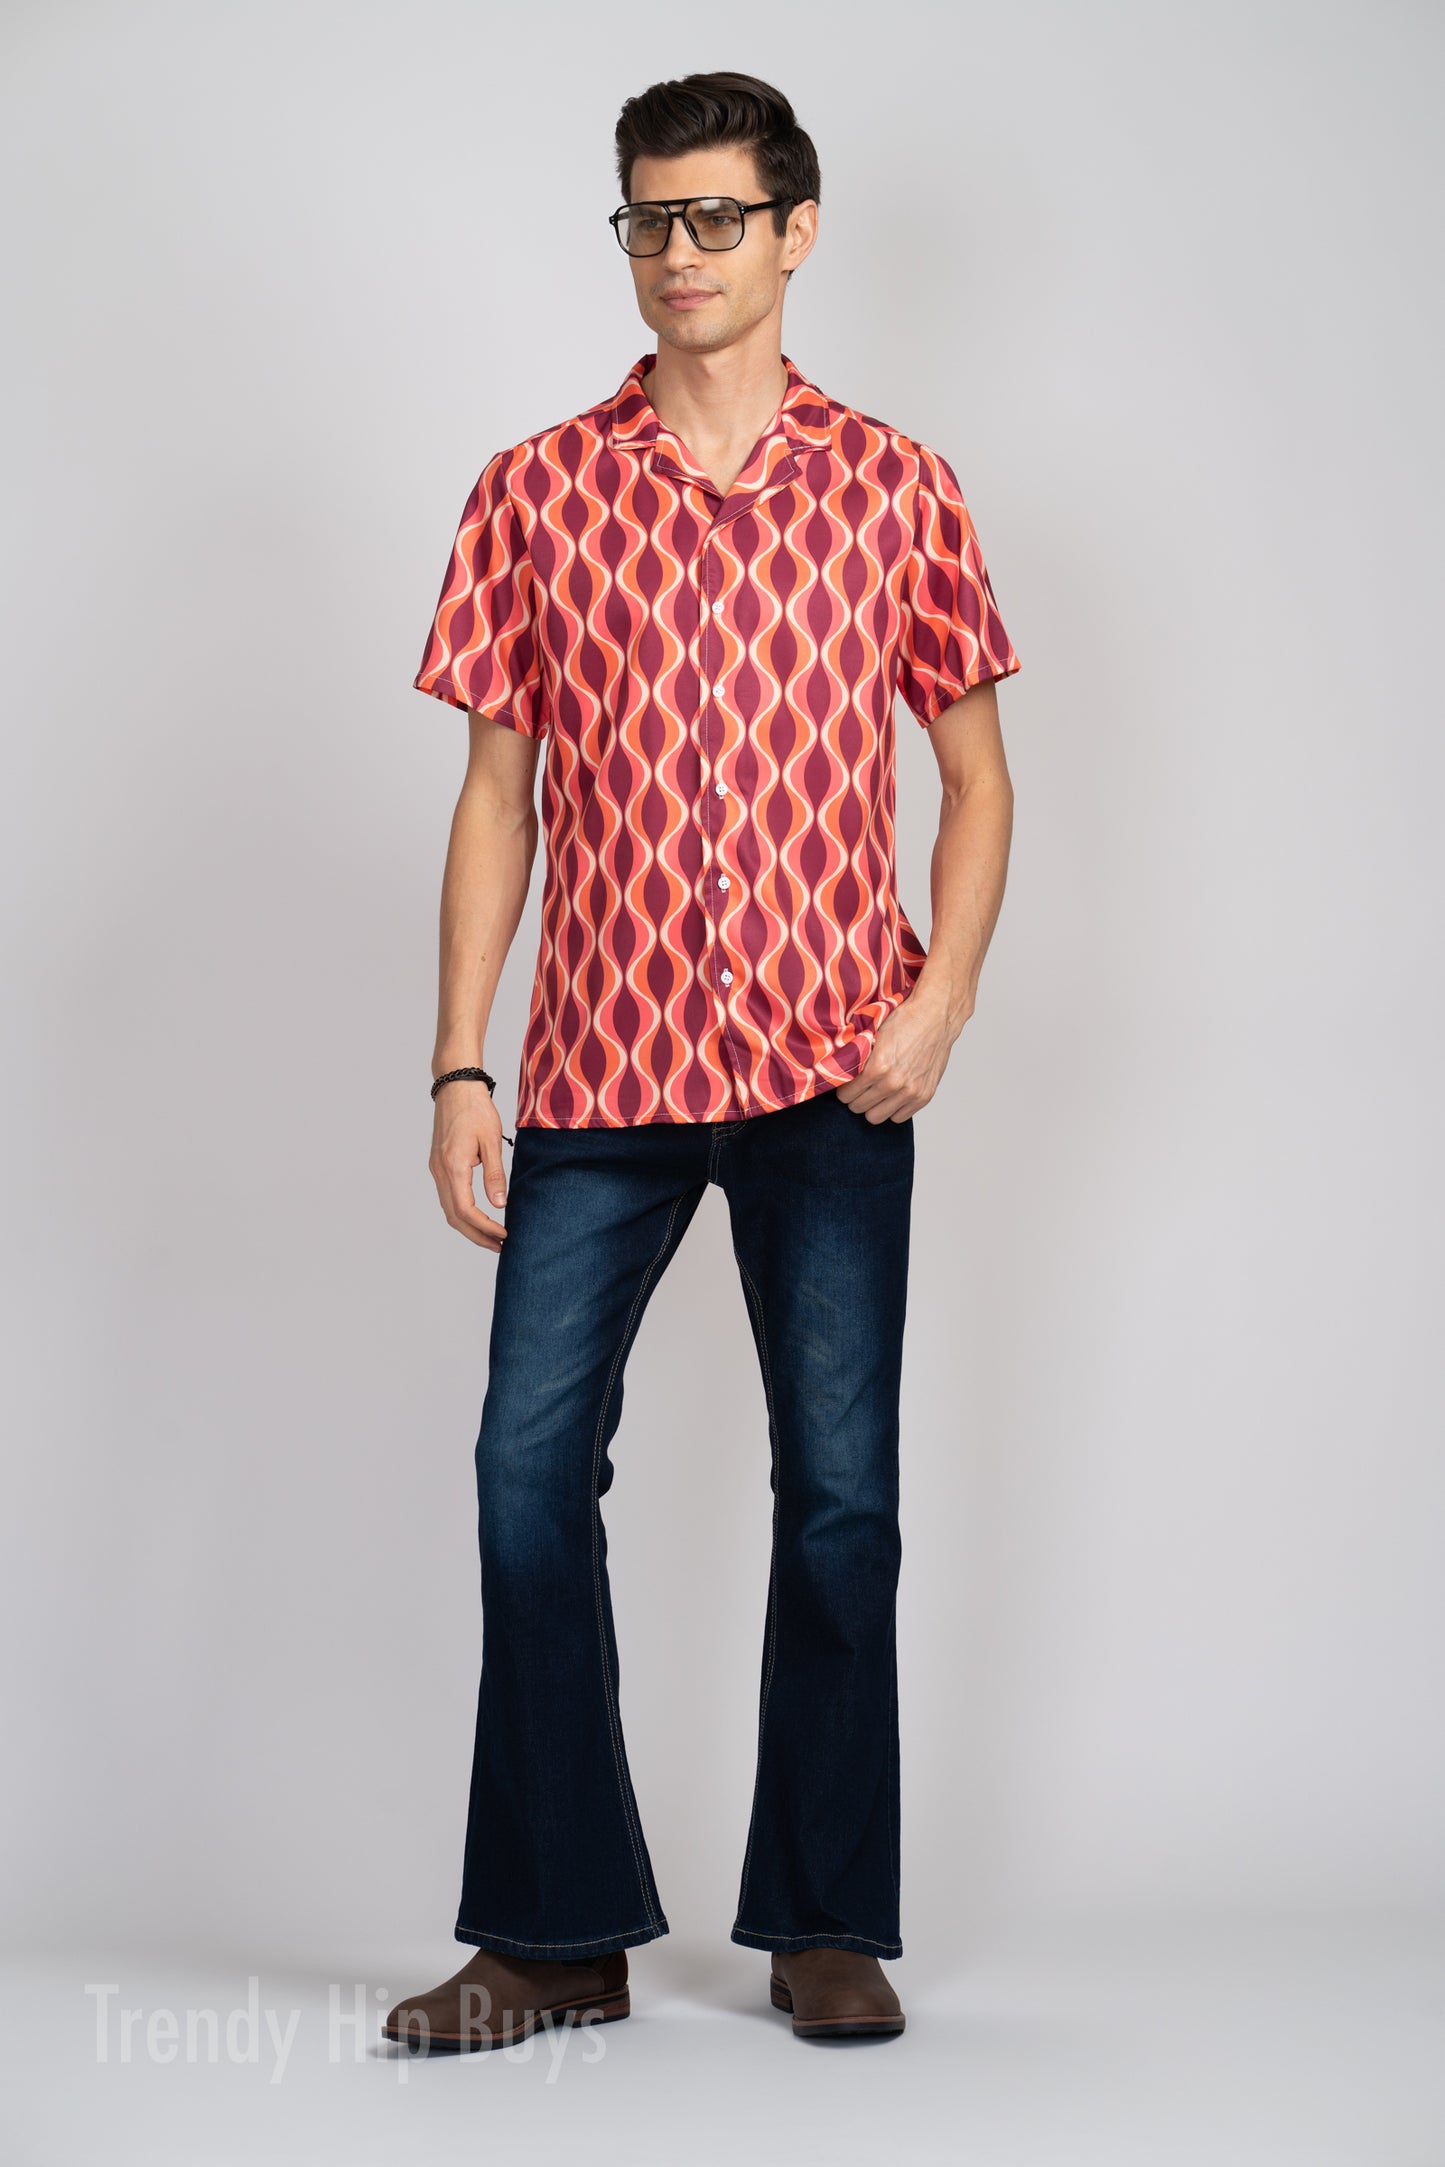 Retro Shirt Men, Retro Top, Mid Century Style Top, Mod 60s Style Shirt, Vintage Style Top, Maroon Shirt, Hawaiian Shirt, Dress Shirt